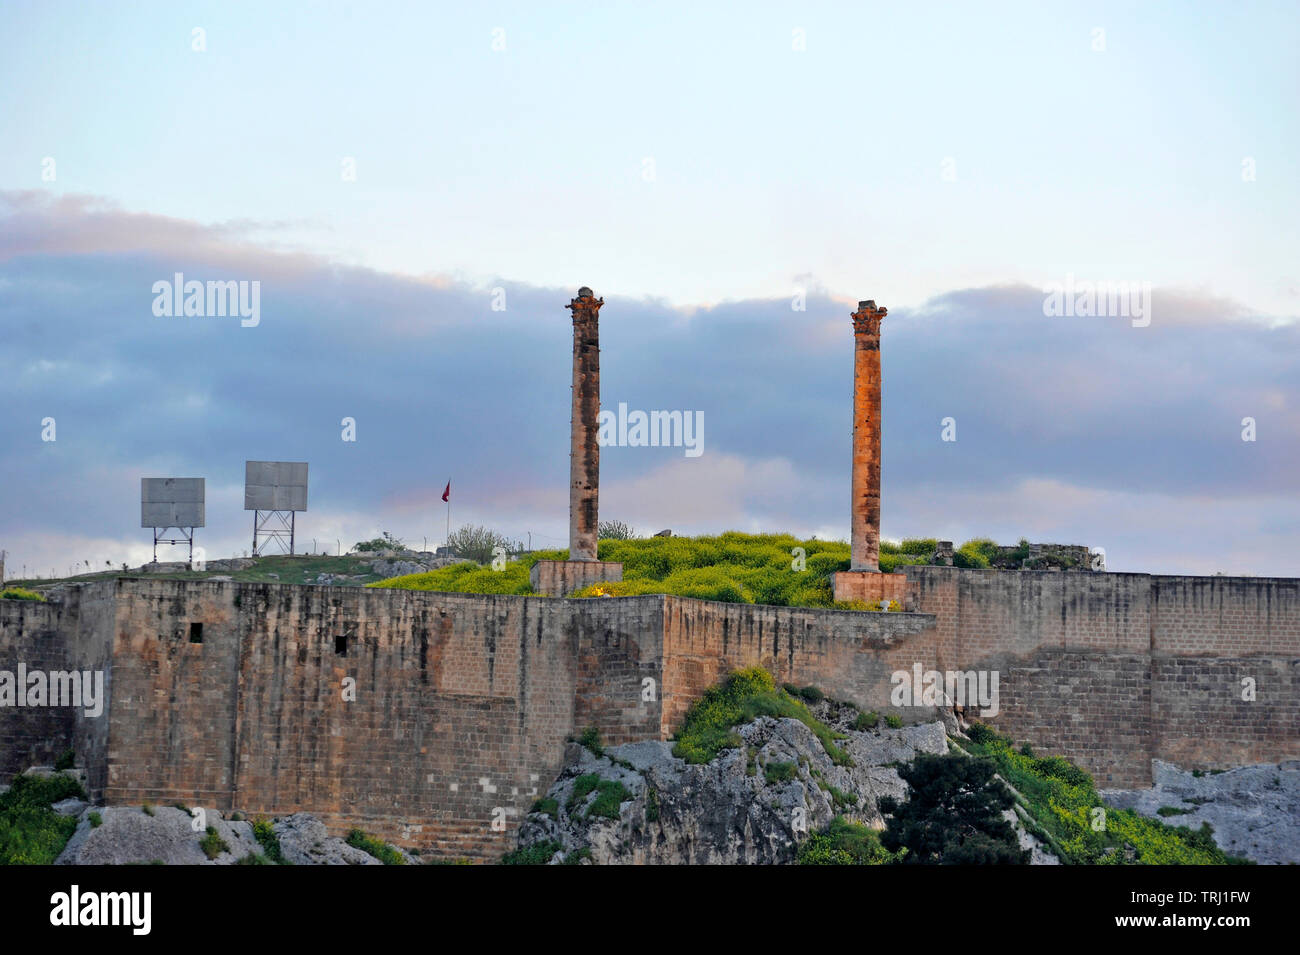 Landscape with lit pillars in Sanliurfa, Turkey Stock Photo